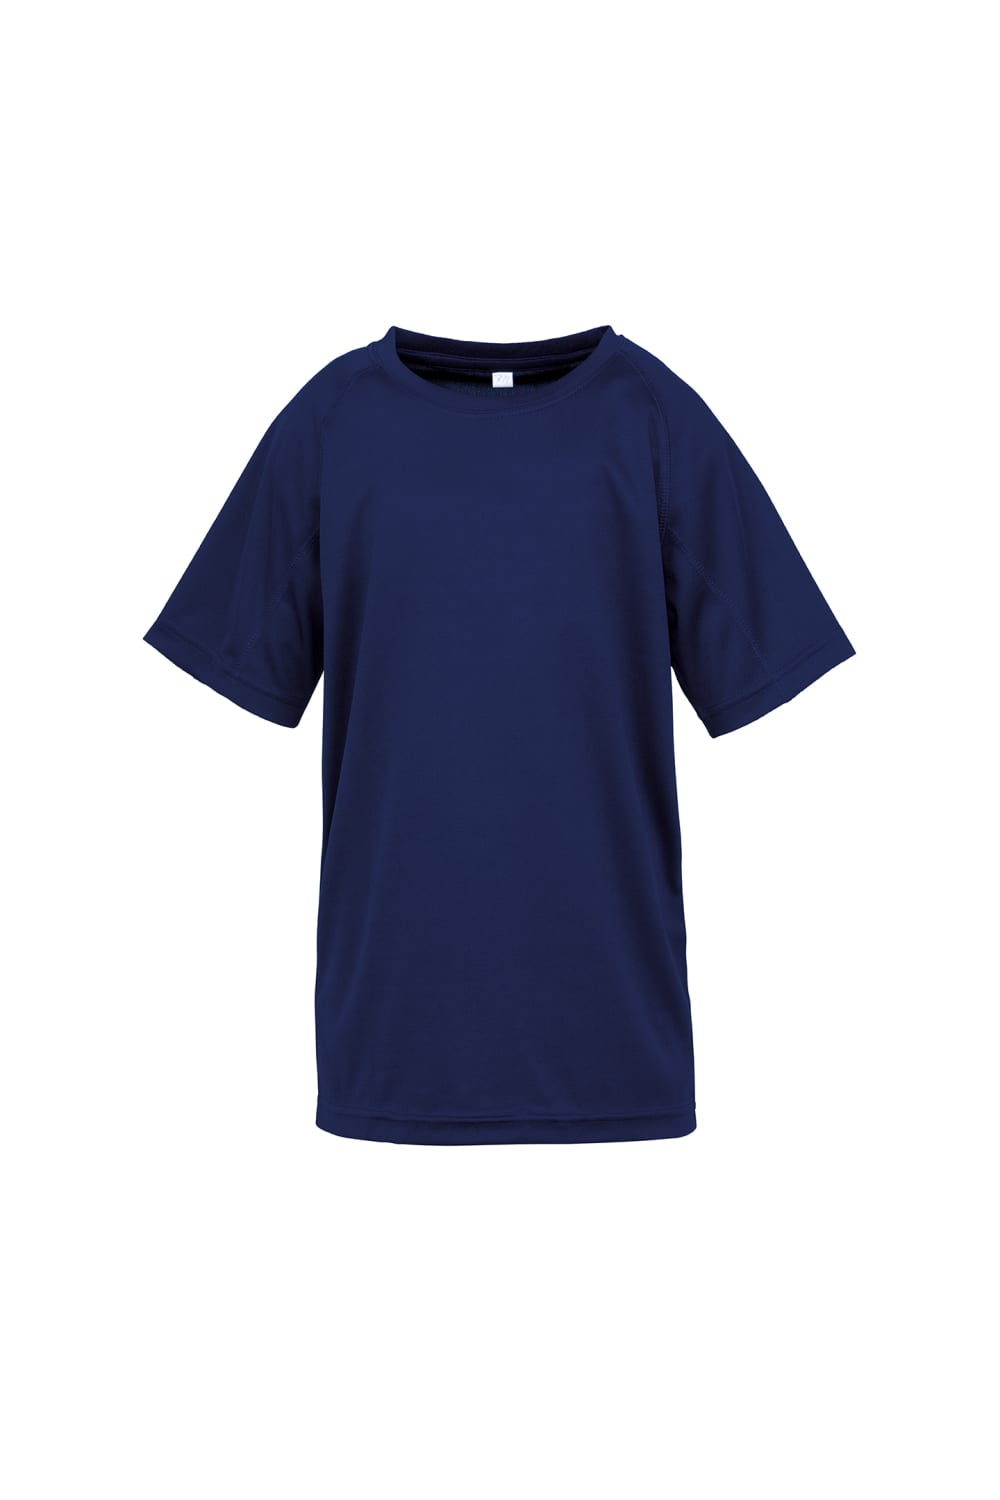 Chidlrens/Kids Impact Performance Aircool T-Shirt - Navy